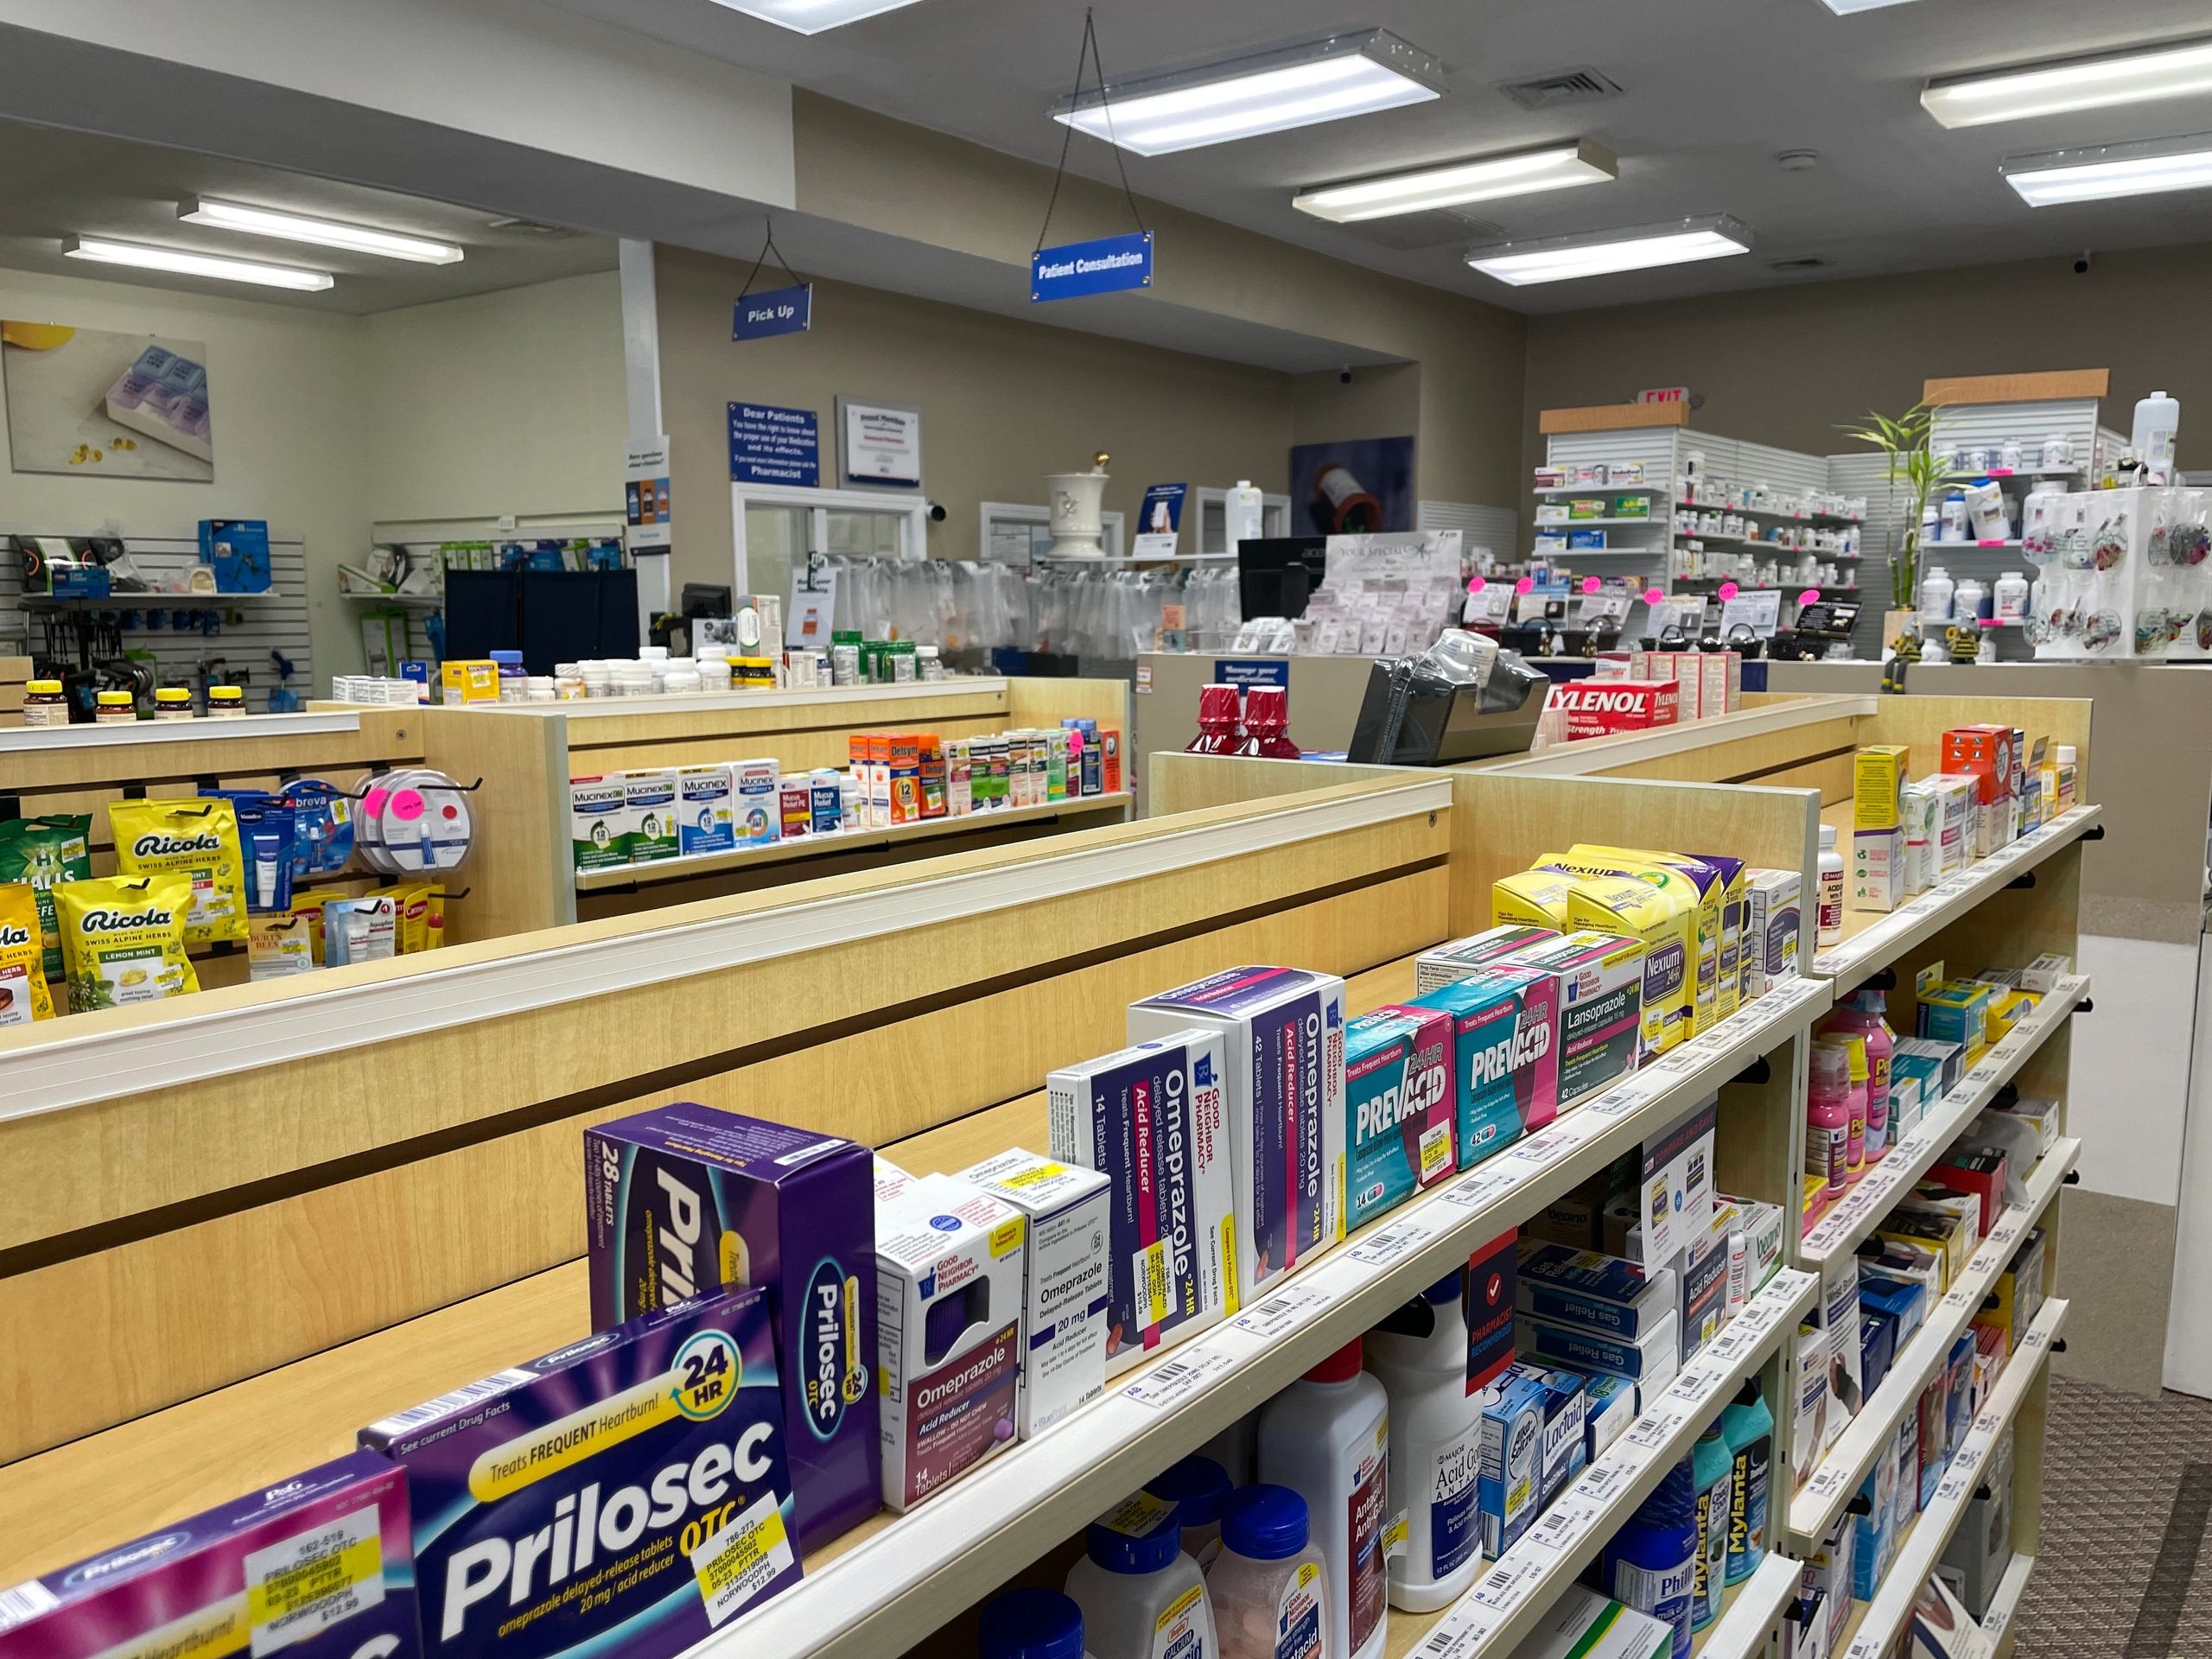 Macdonald's Prescriptions, Pharmacy and Medical Supplies